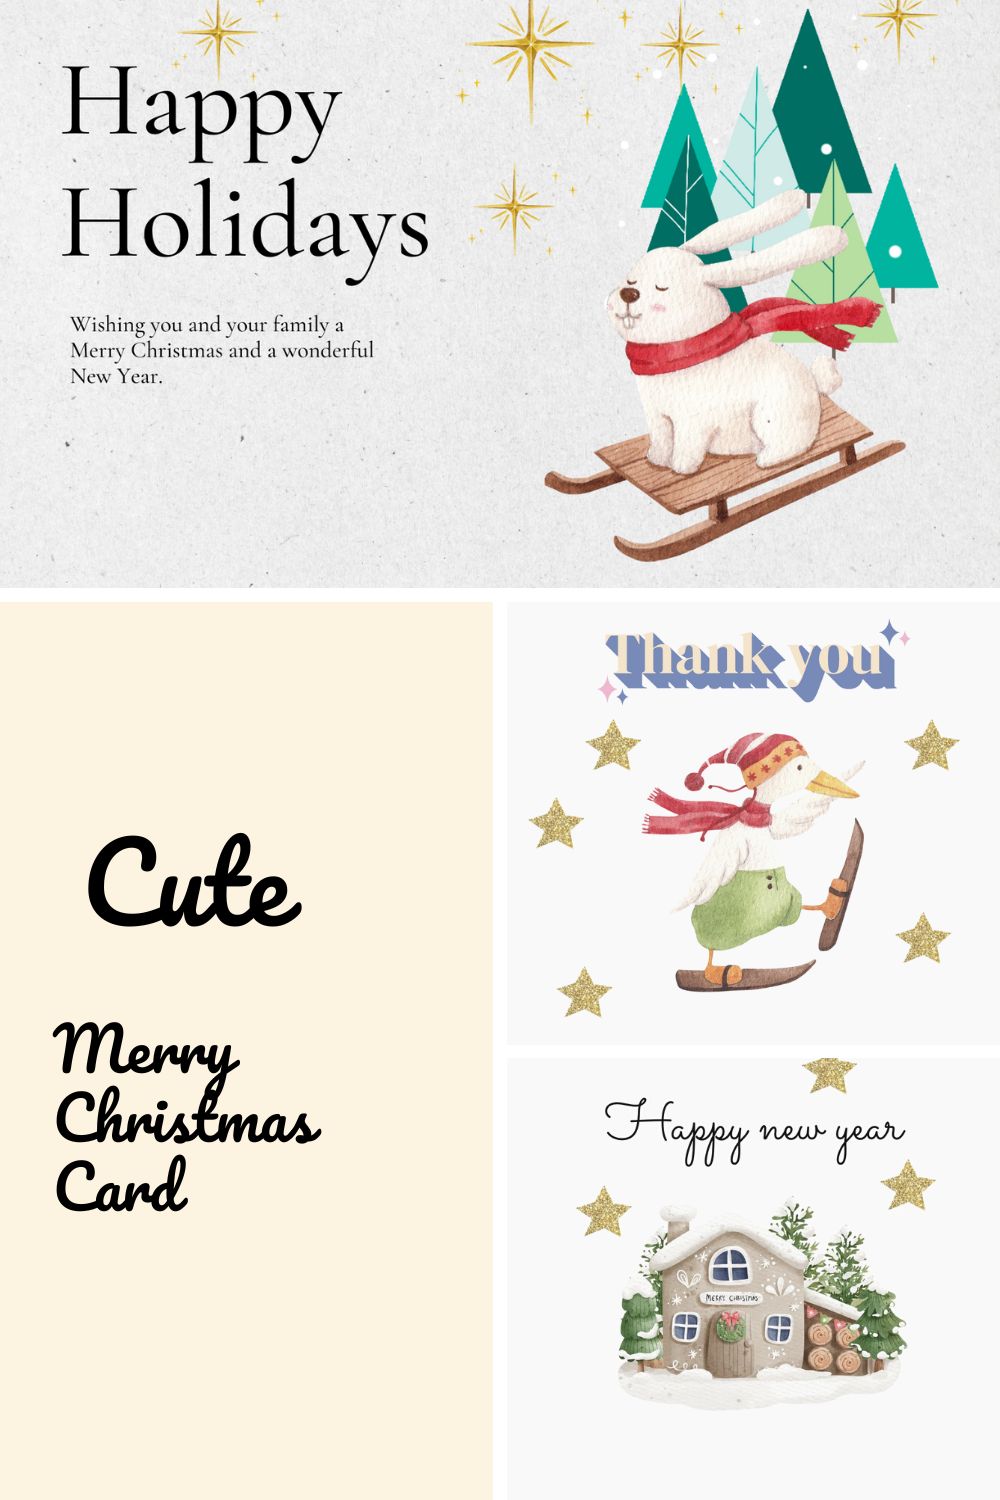 Cute Merry Christmas Card Design pinterest image.